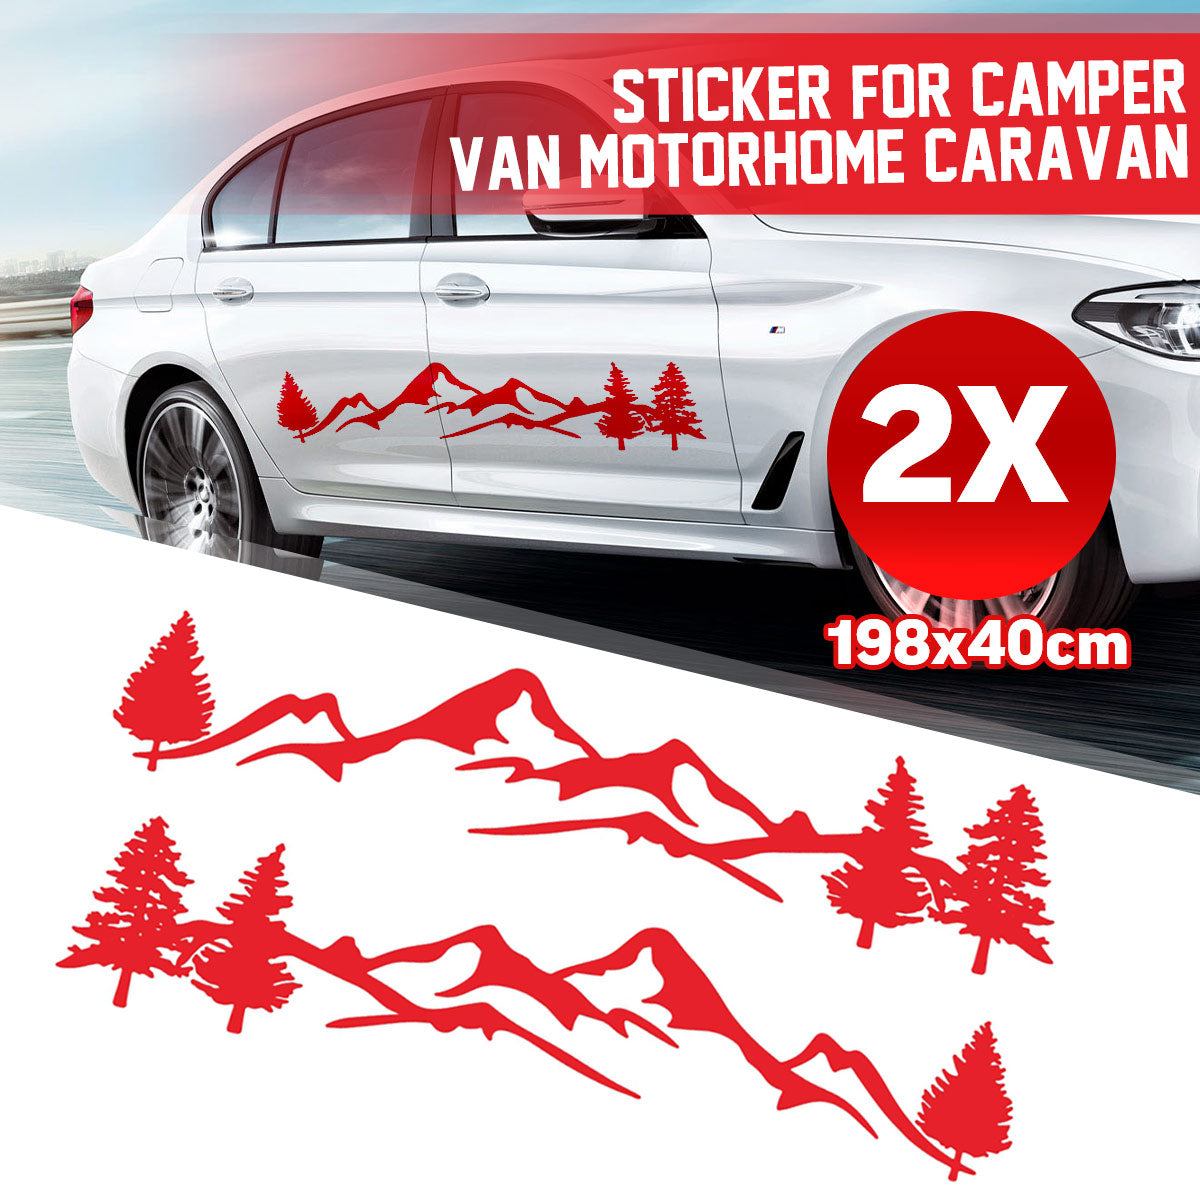 Firebrick 2pcs Side Body Stickers Decal Mountain & Tree For Camper Van Motorhome Car Caravan Boat